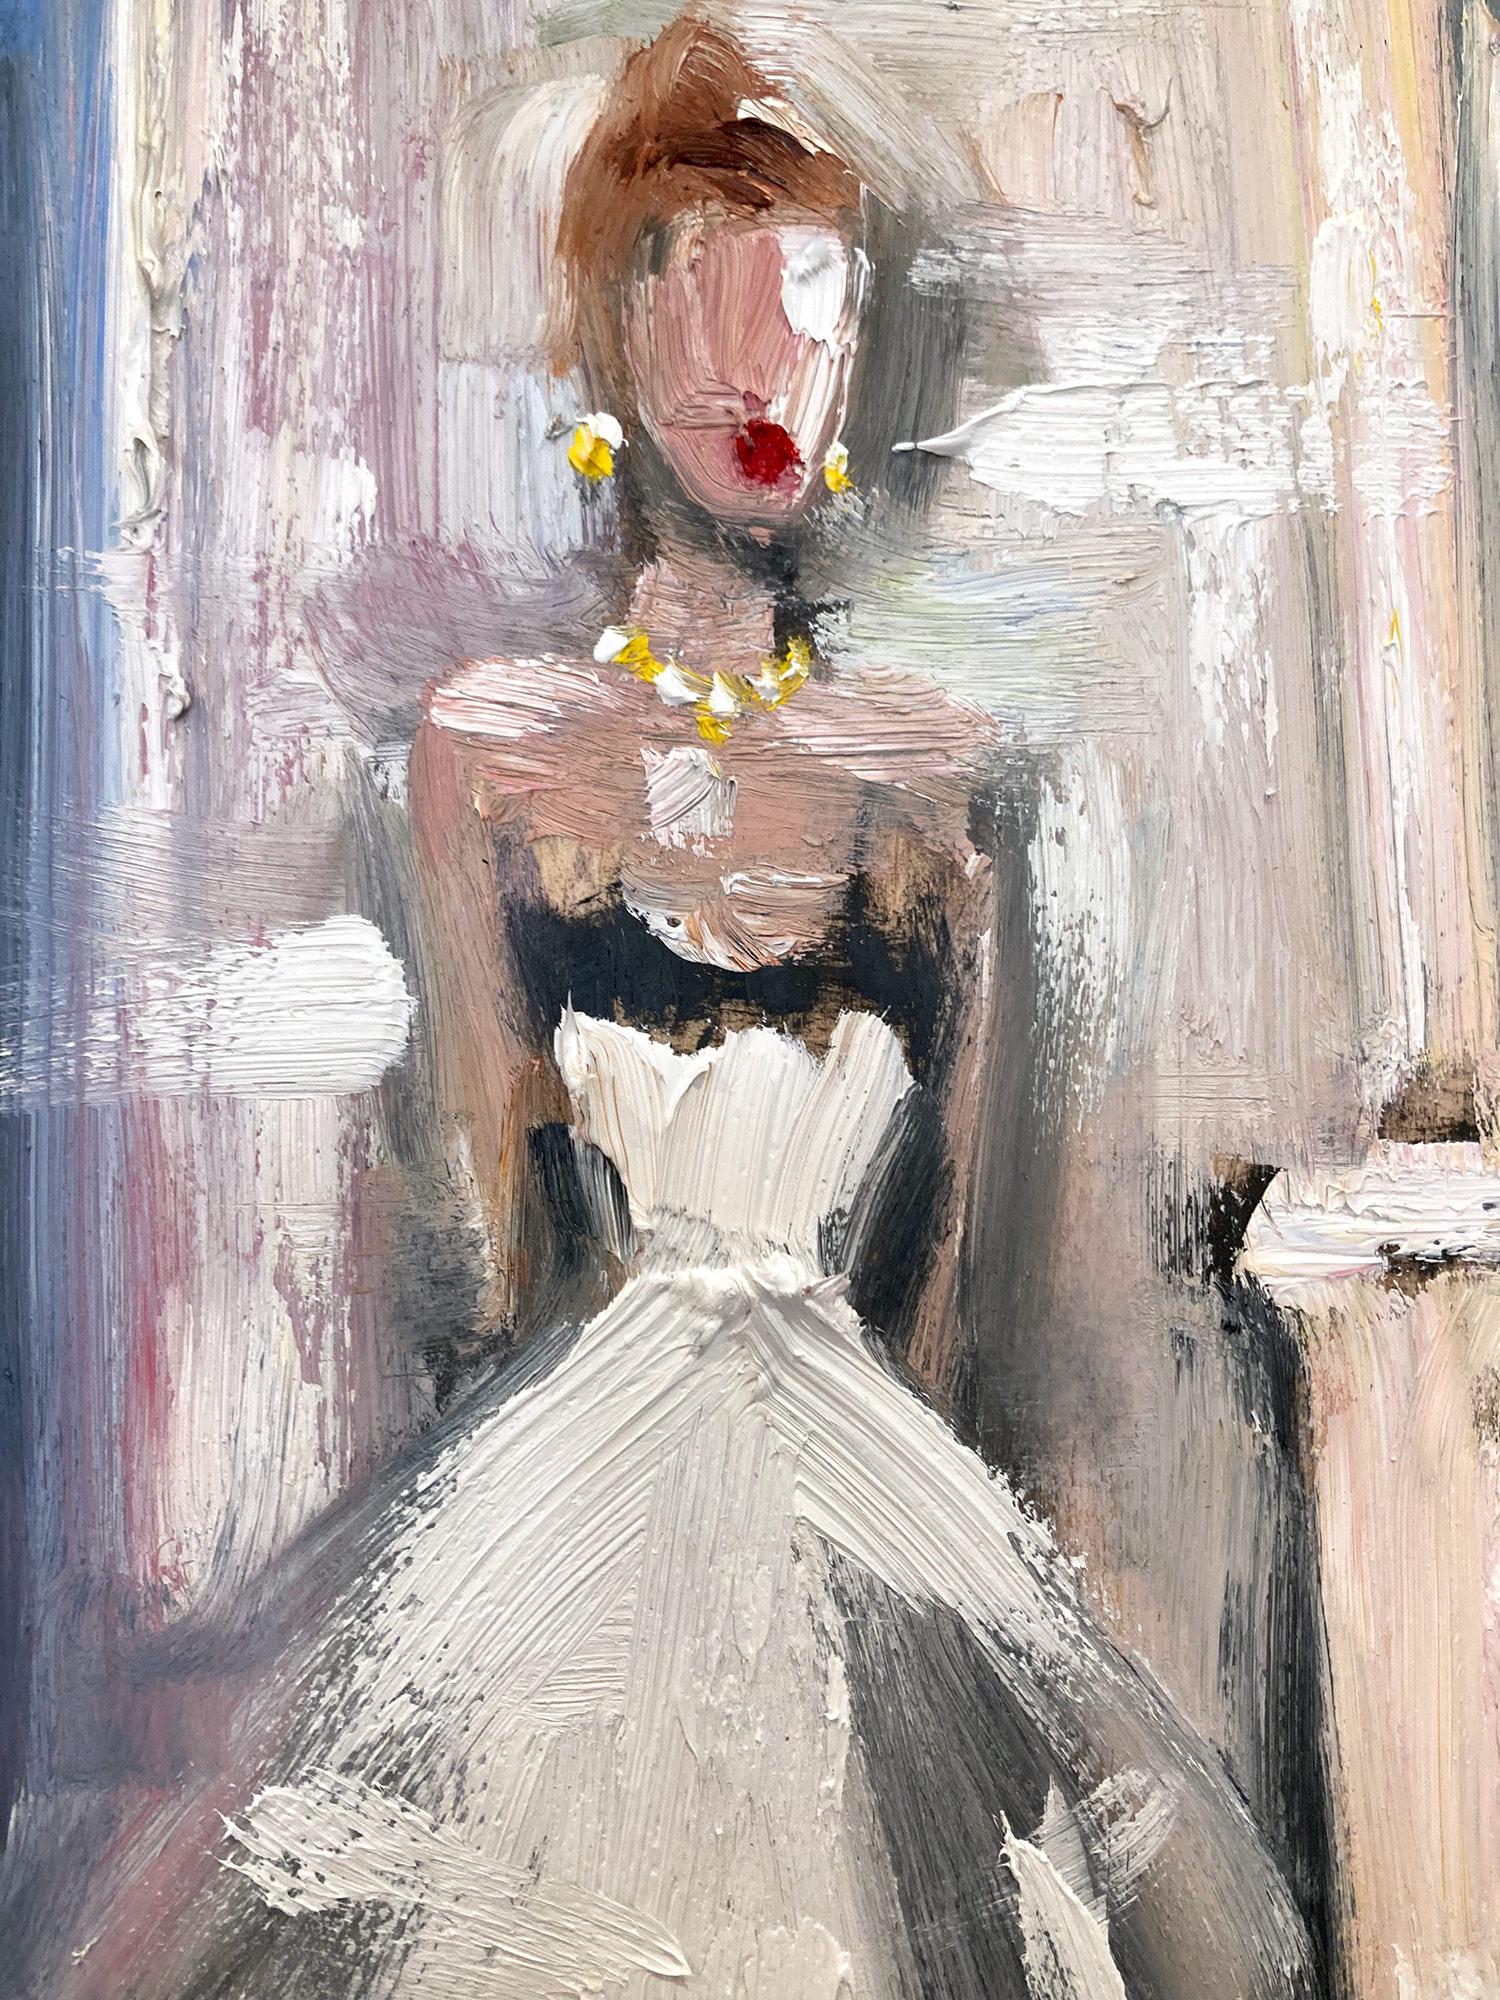 „As She Glimmers“ Interieur Haute Couture in Chanel Impressionistisches Ölgemälde (Amerikanischer Impressionismus), Painting, von Cindy Shaoul